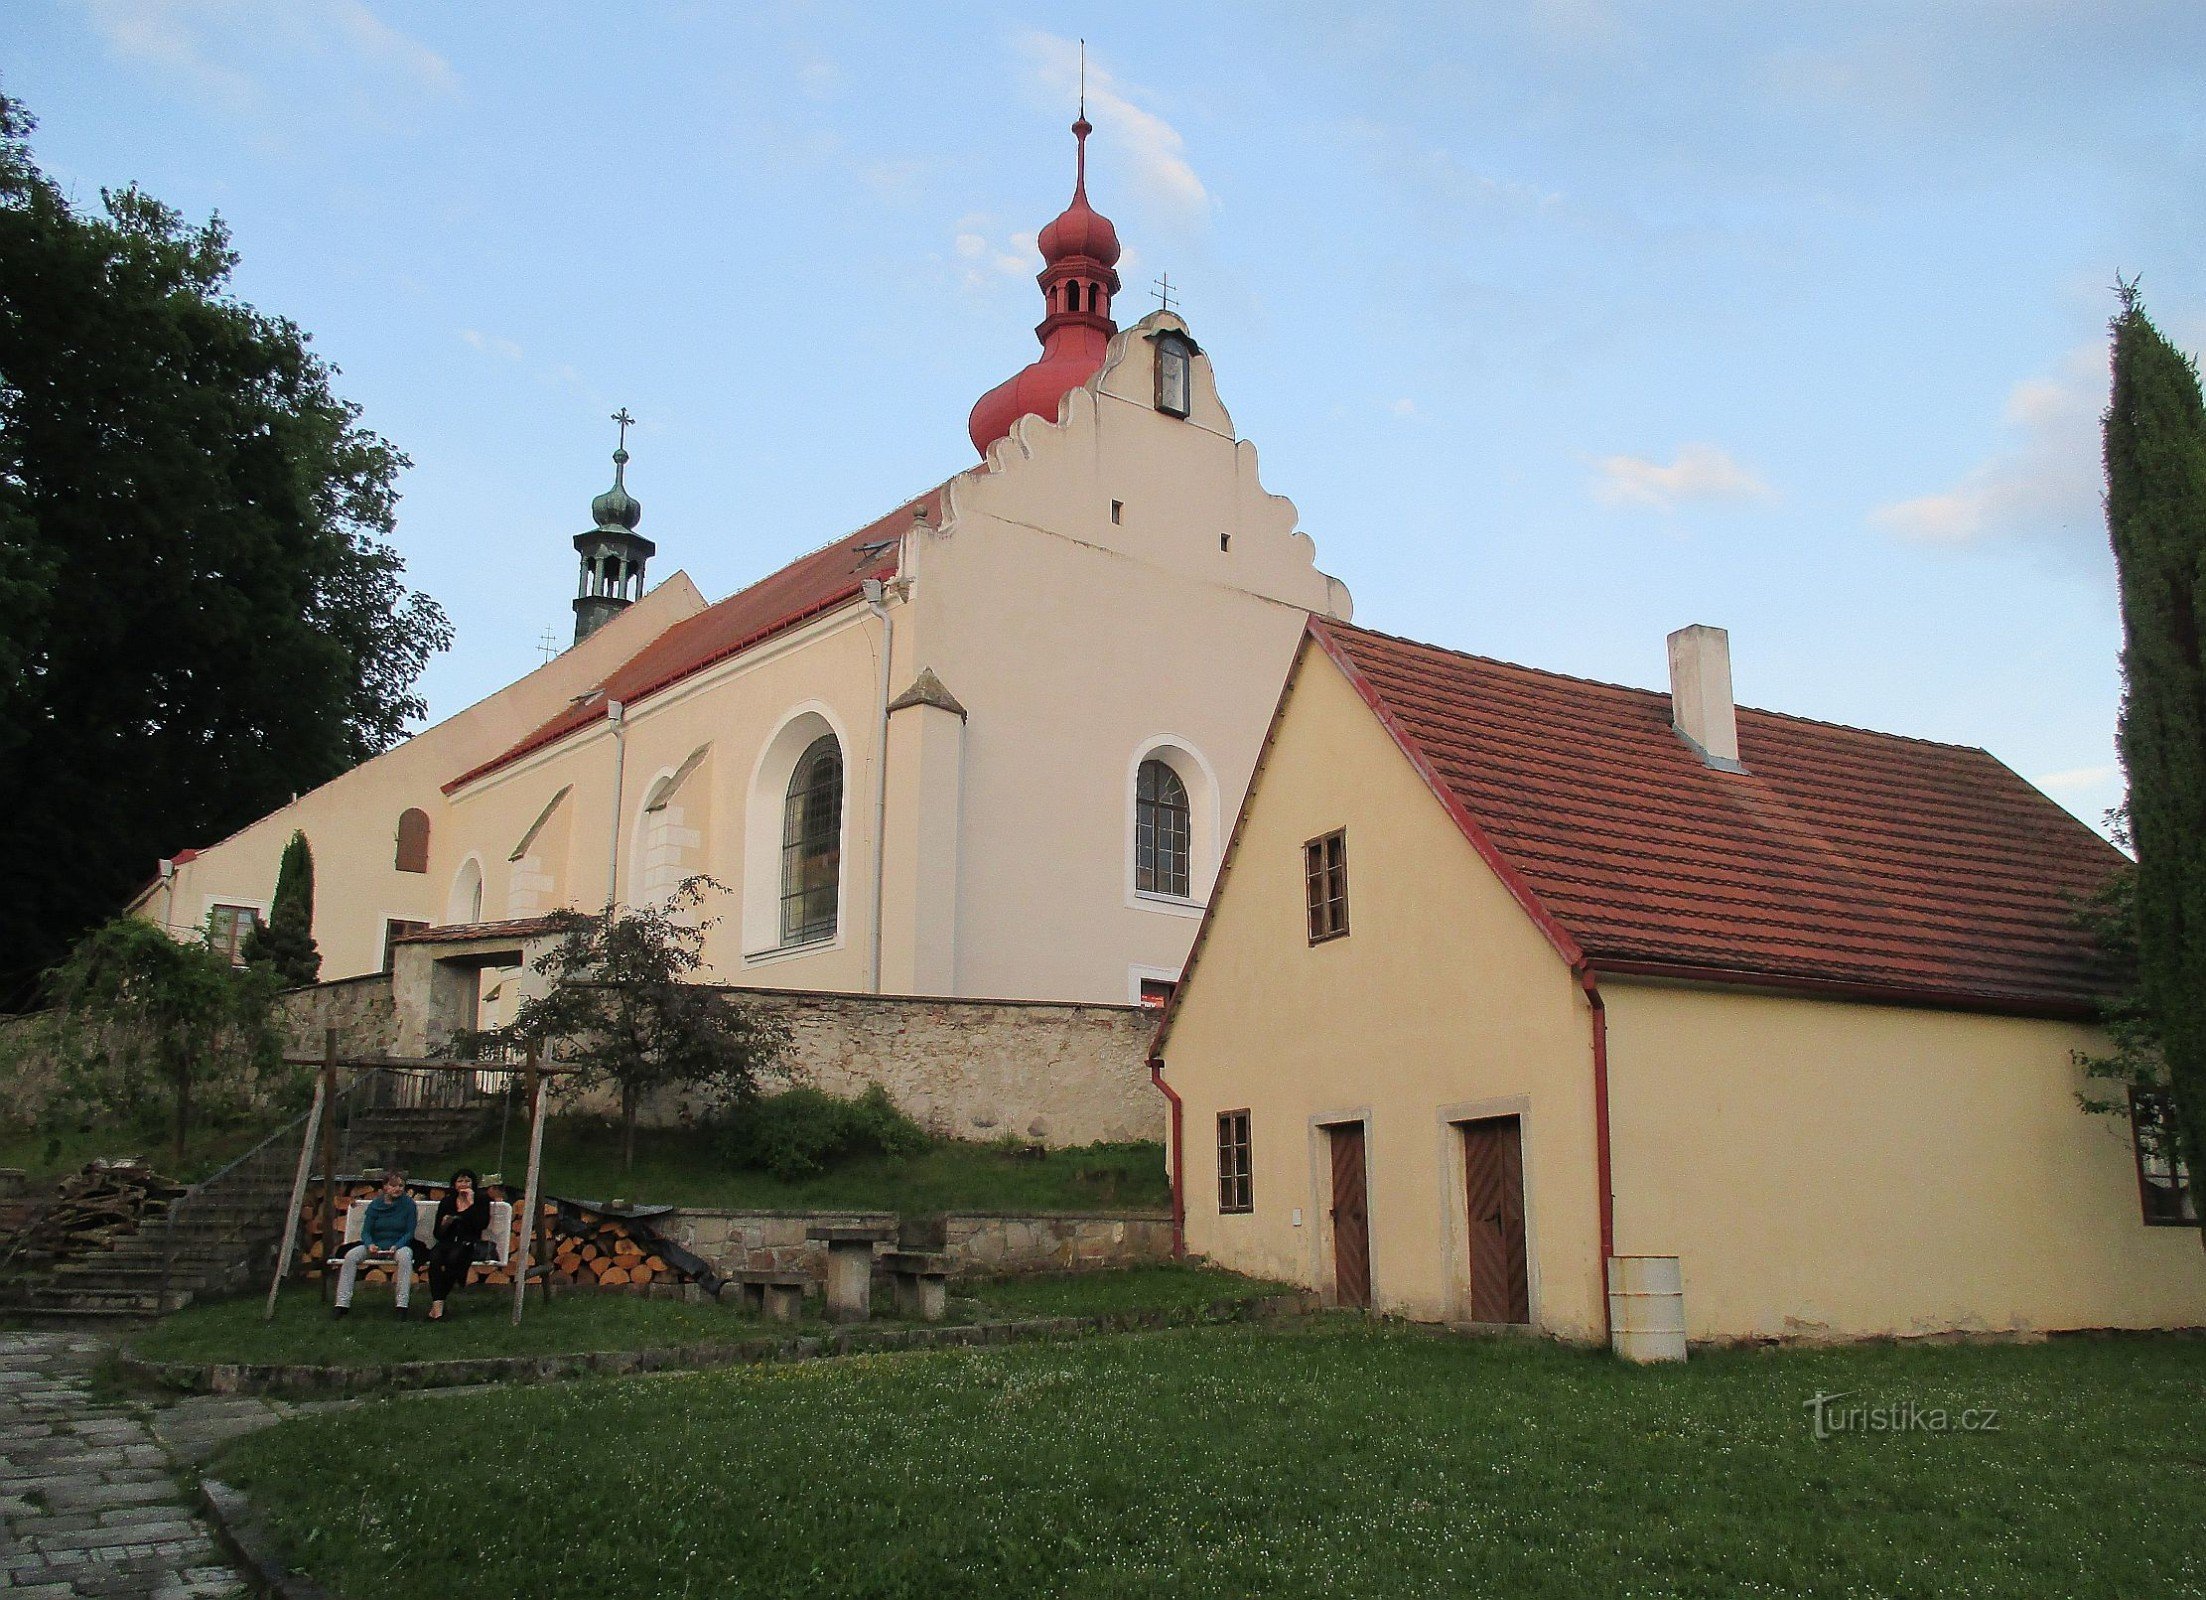 church of st. Martin